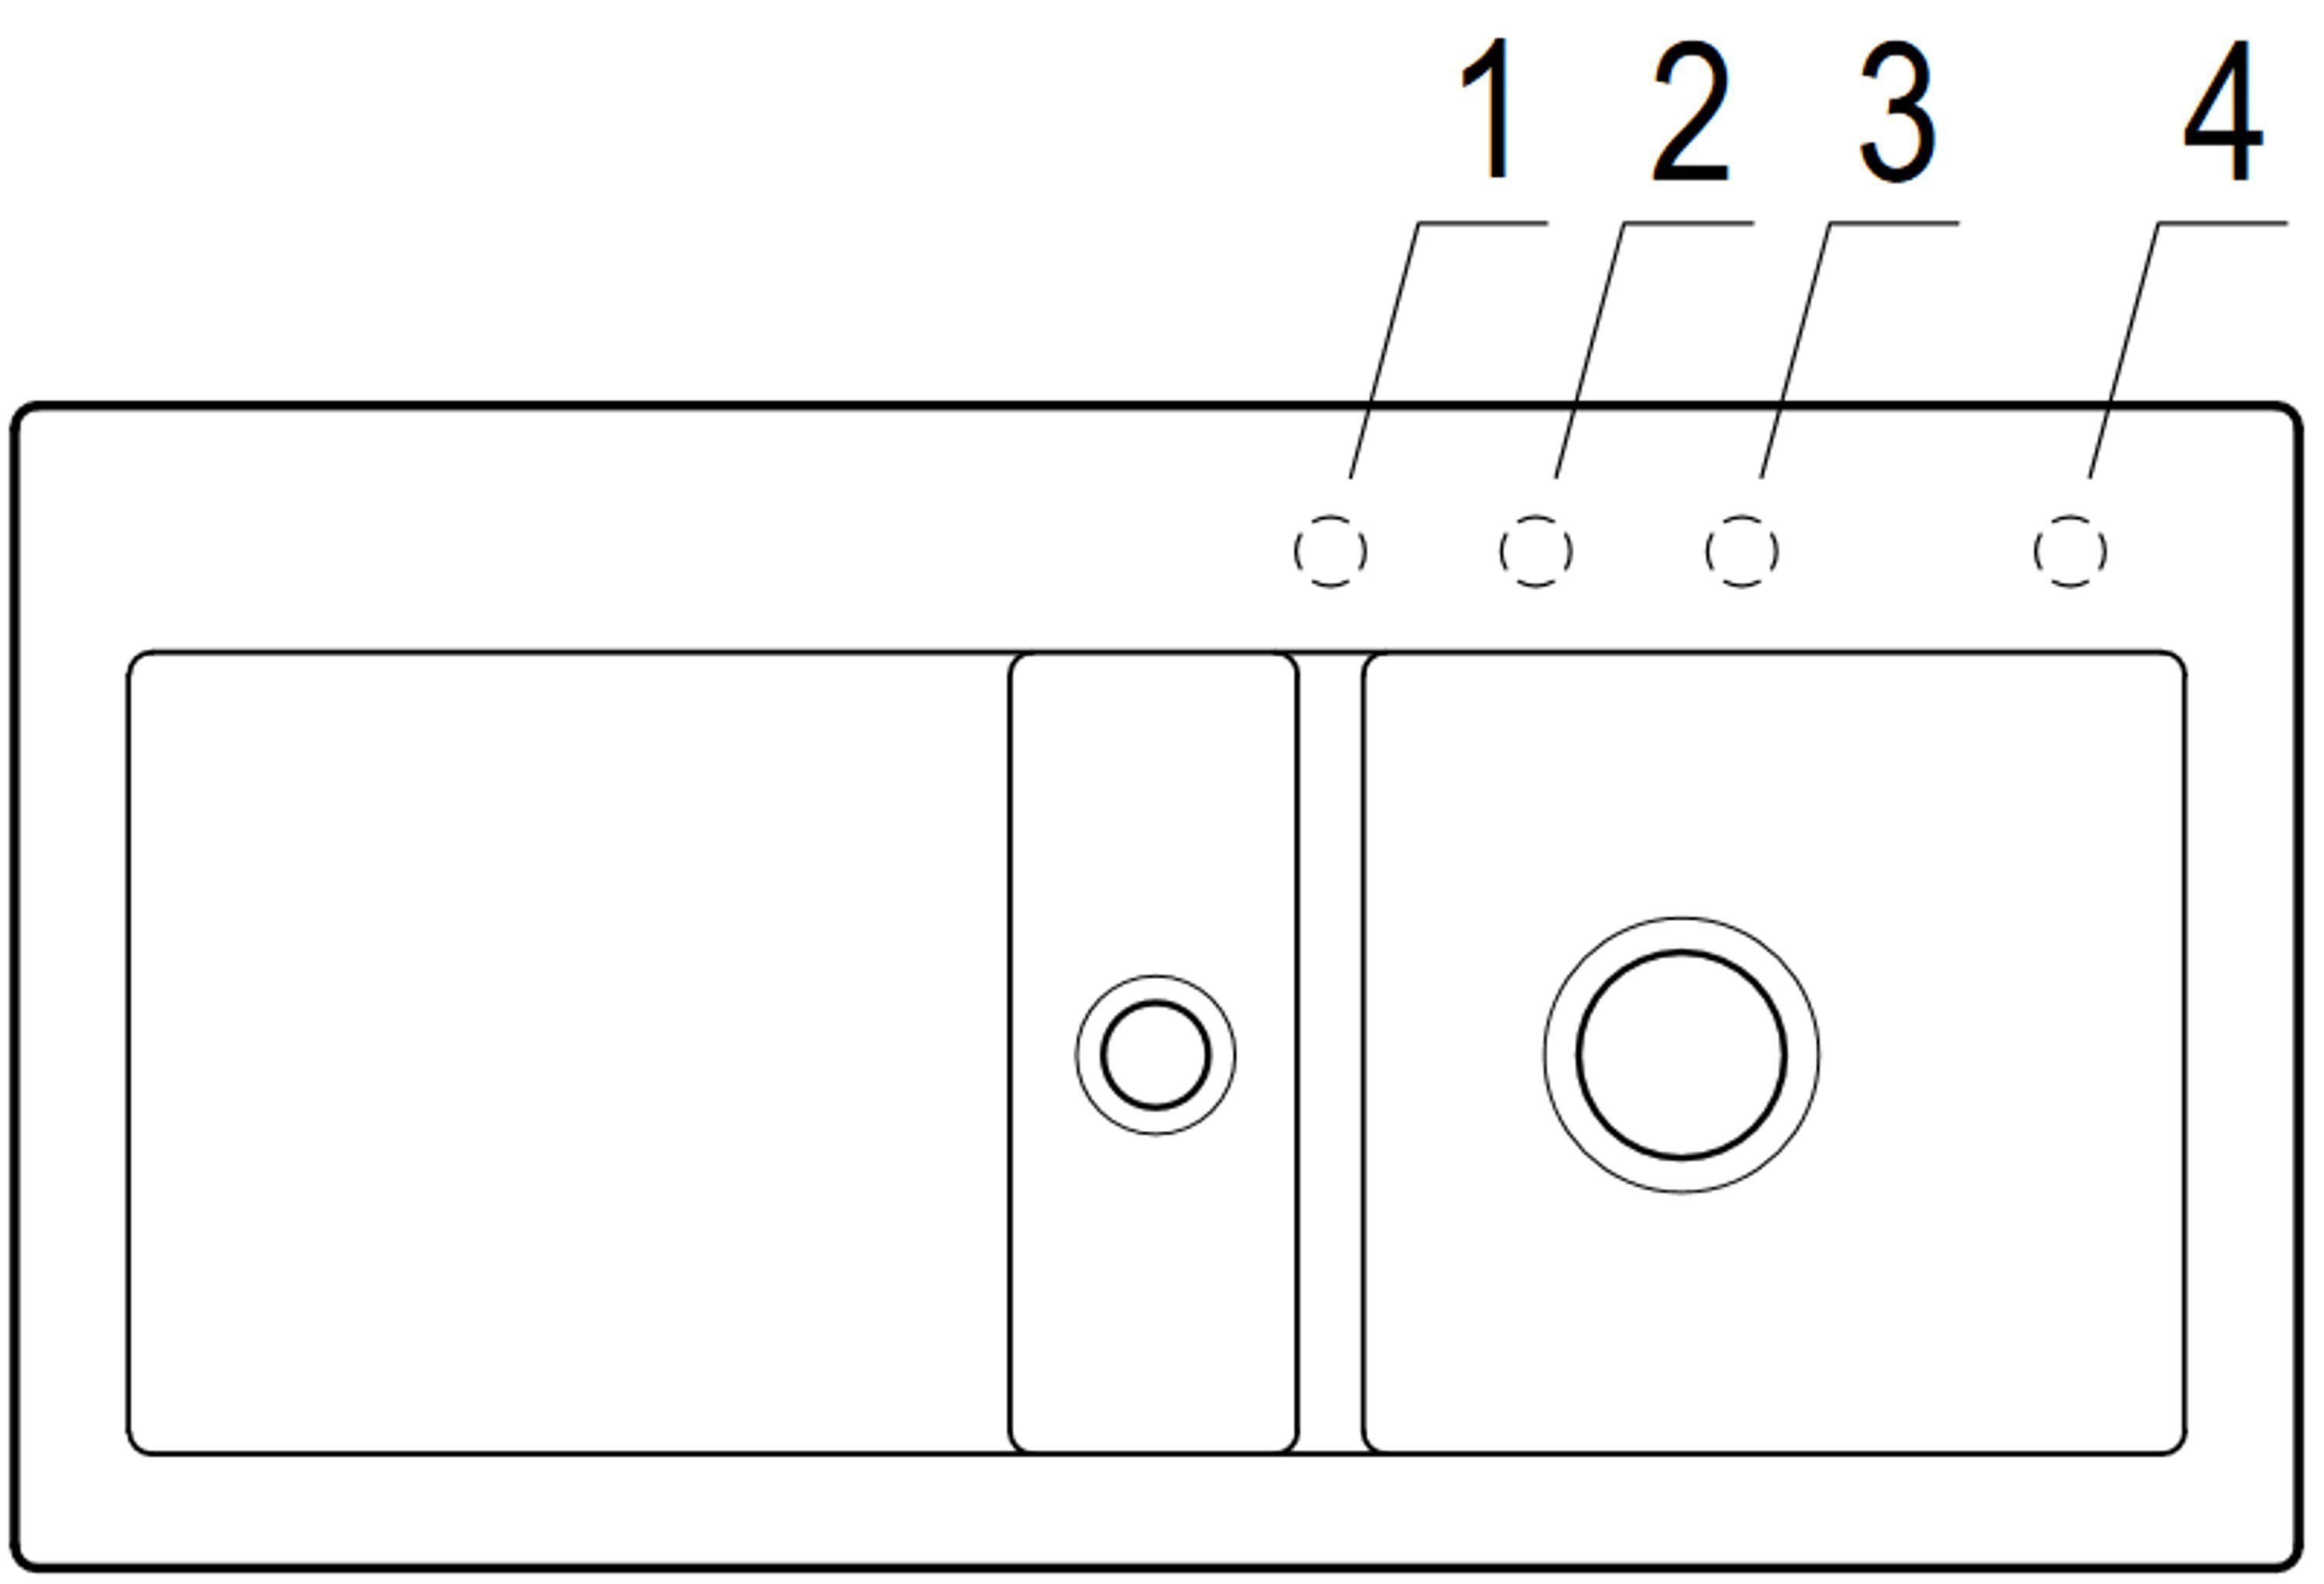 Villeroy & Boch Küchenspüle 6712 Rechteckig, rechts i4, möglich cm, Geschmacksmuster geschützt, und 02 links Becken 100/22